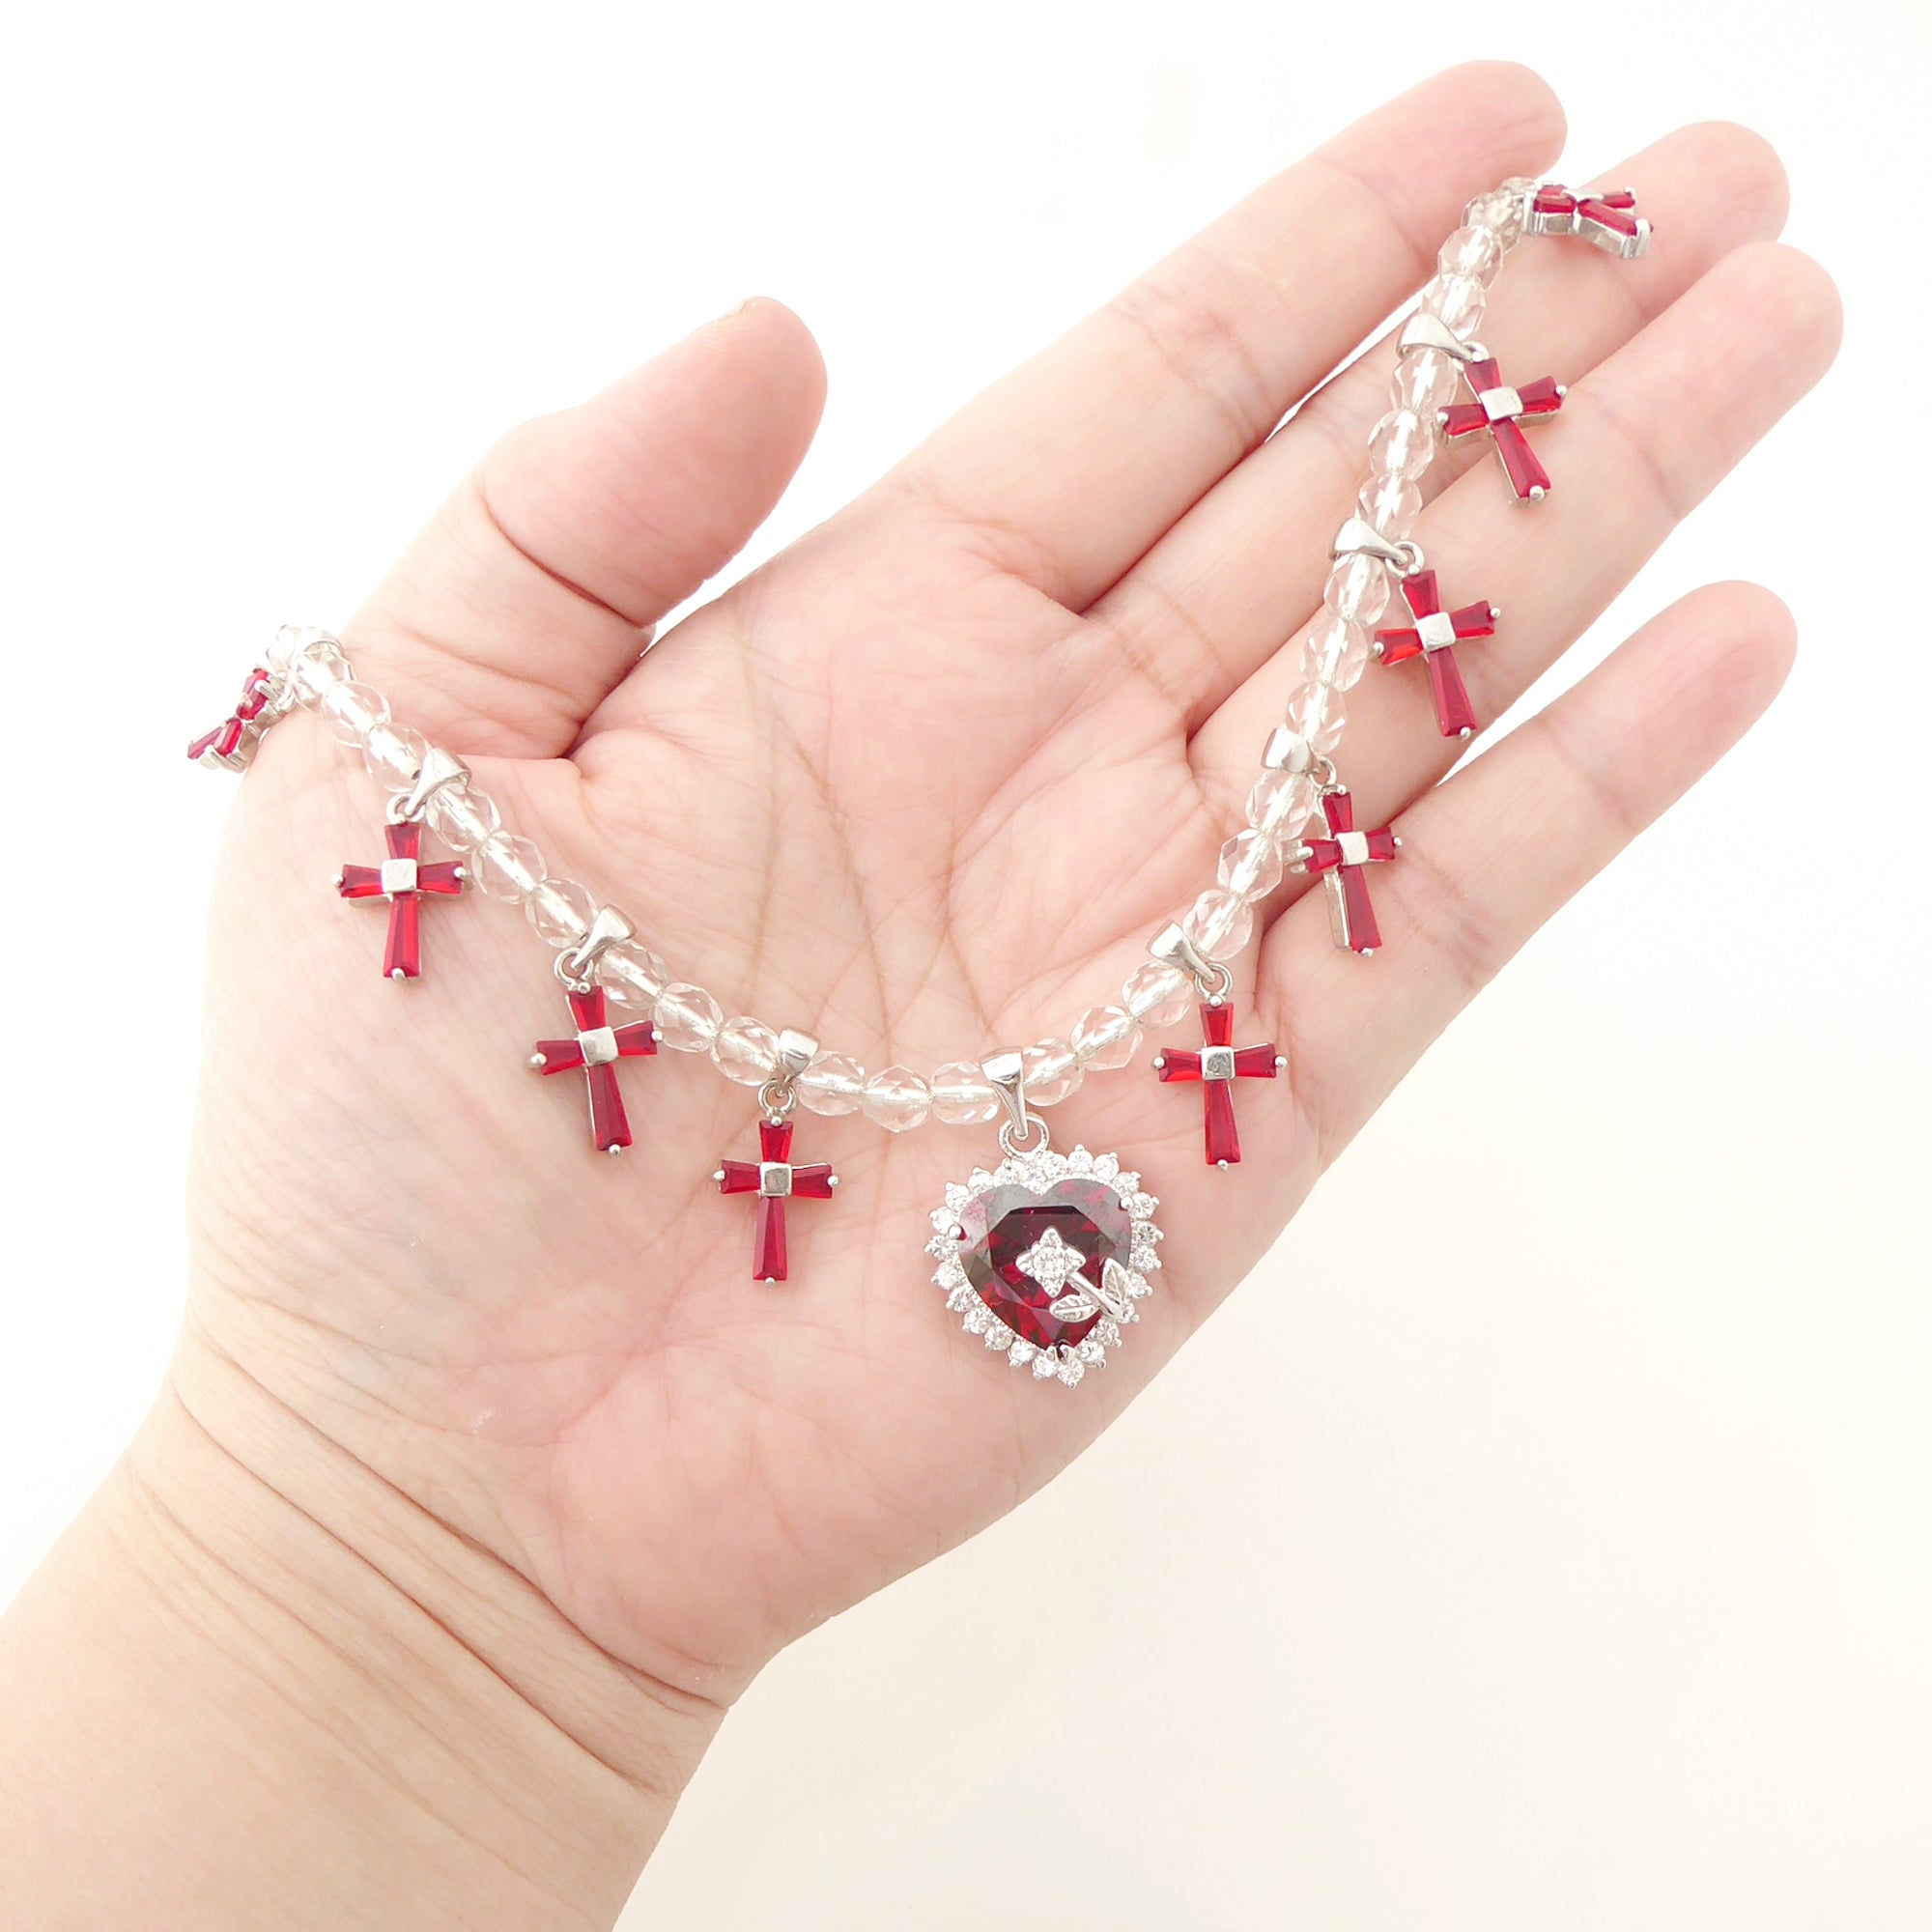 Red rhinestone cross necklace by Jenny Dayco 6